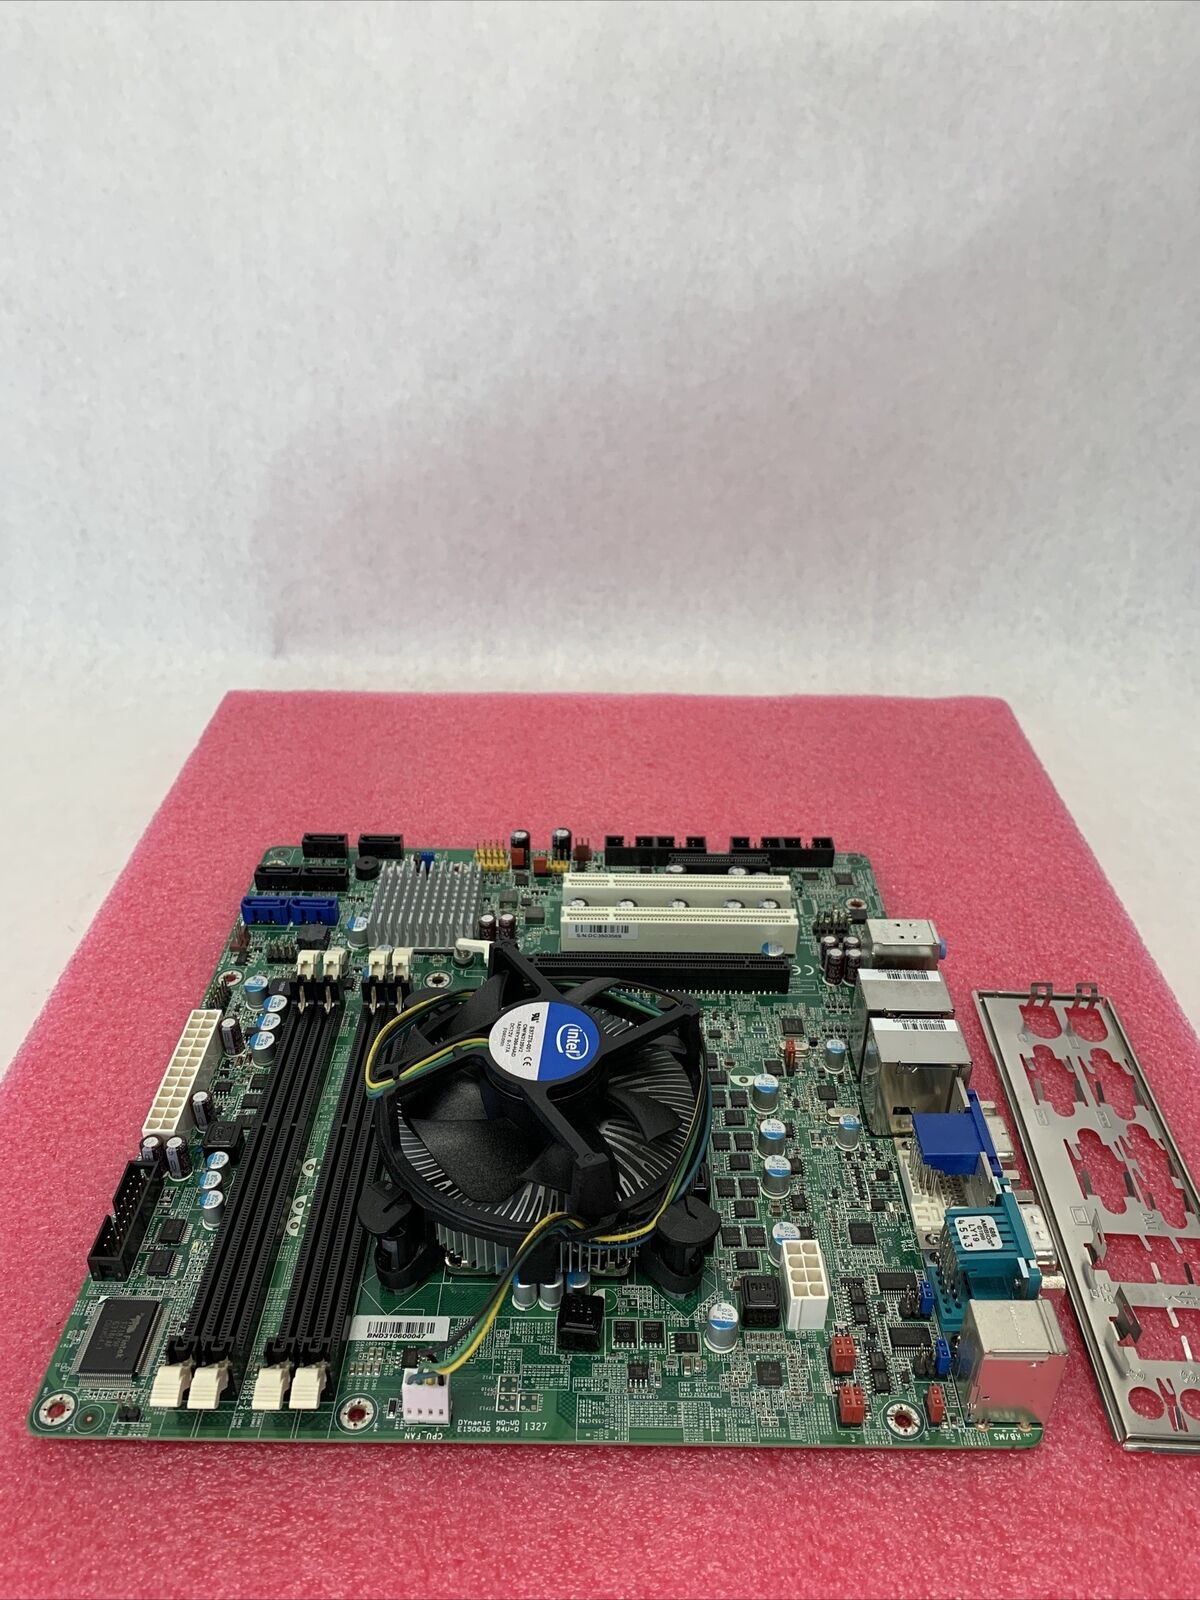 Intel MB331 Motherboard Intel Core i5-3470 3.2GHz No RAM w/Shield